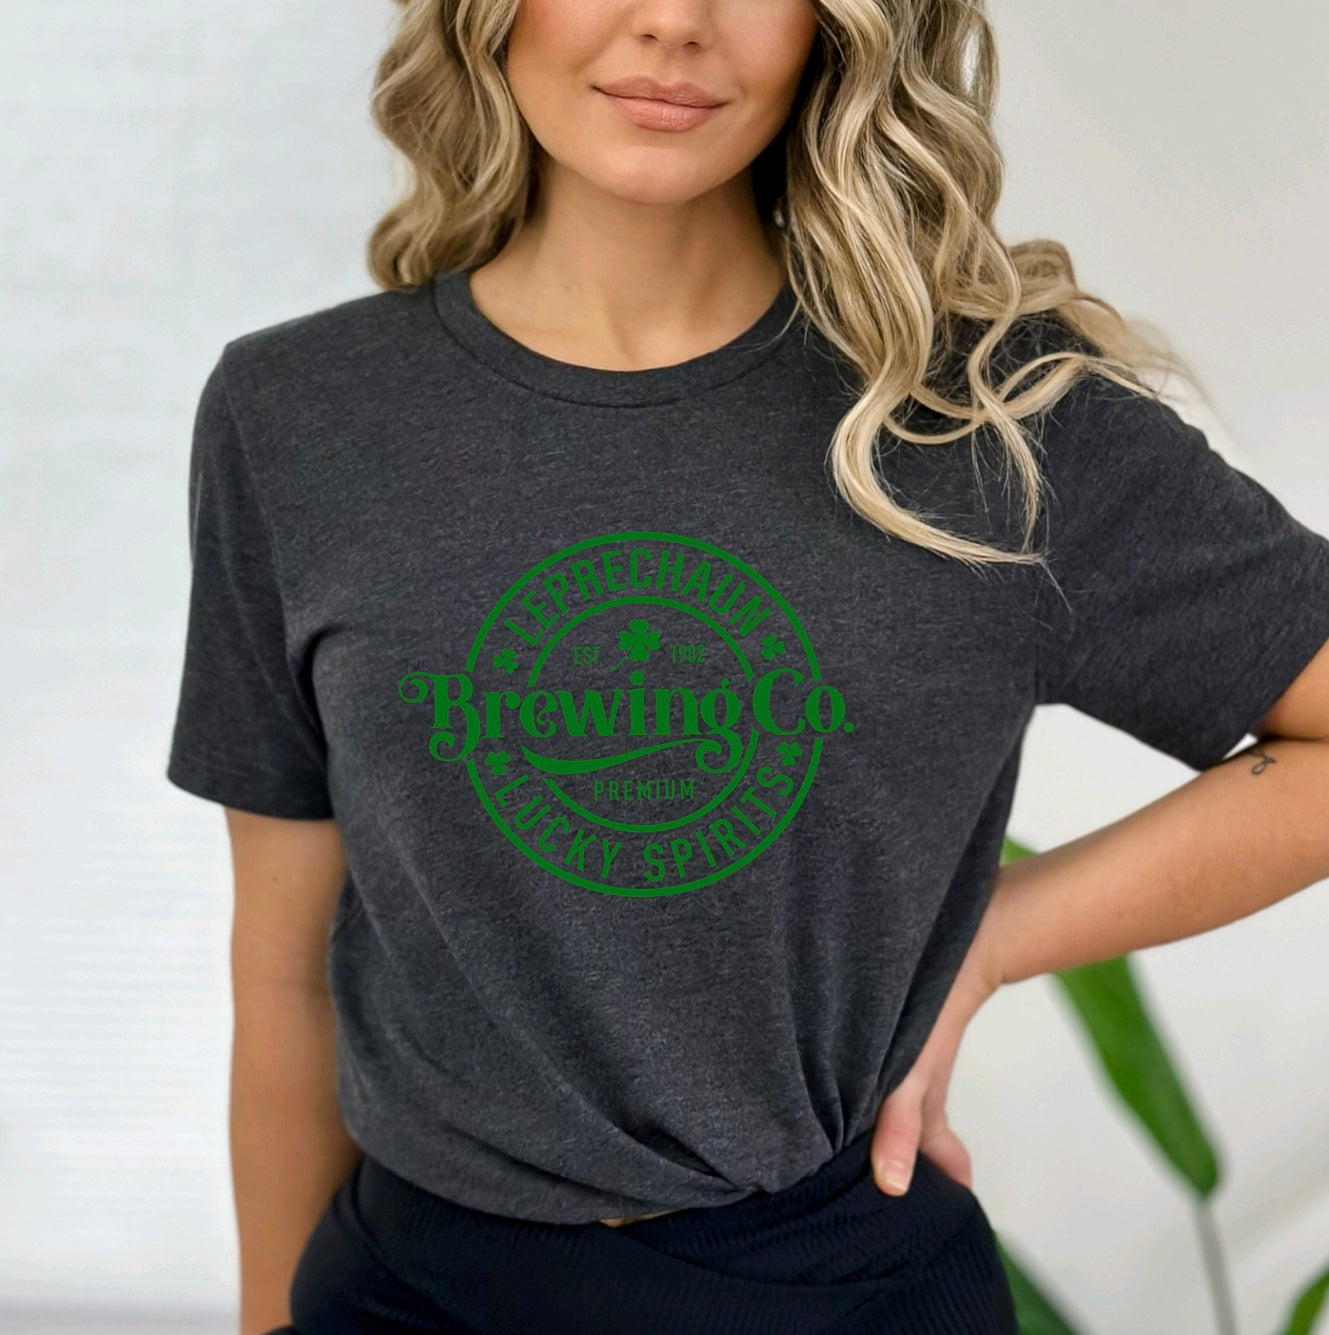 Leprechaun brewing company st patty’s day unisex t-shirt for women in heather dark grey